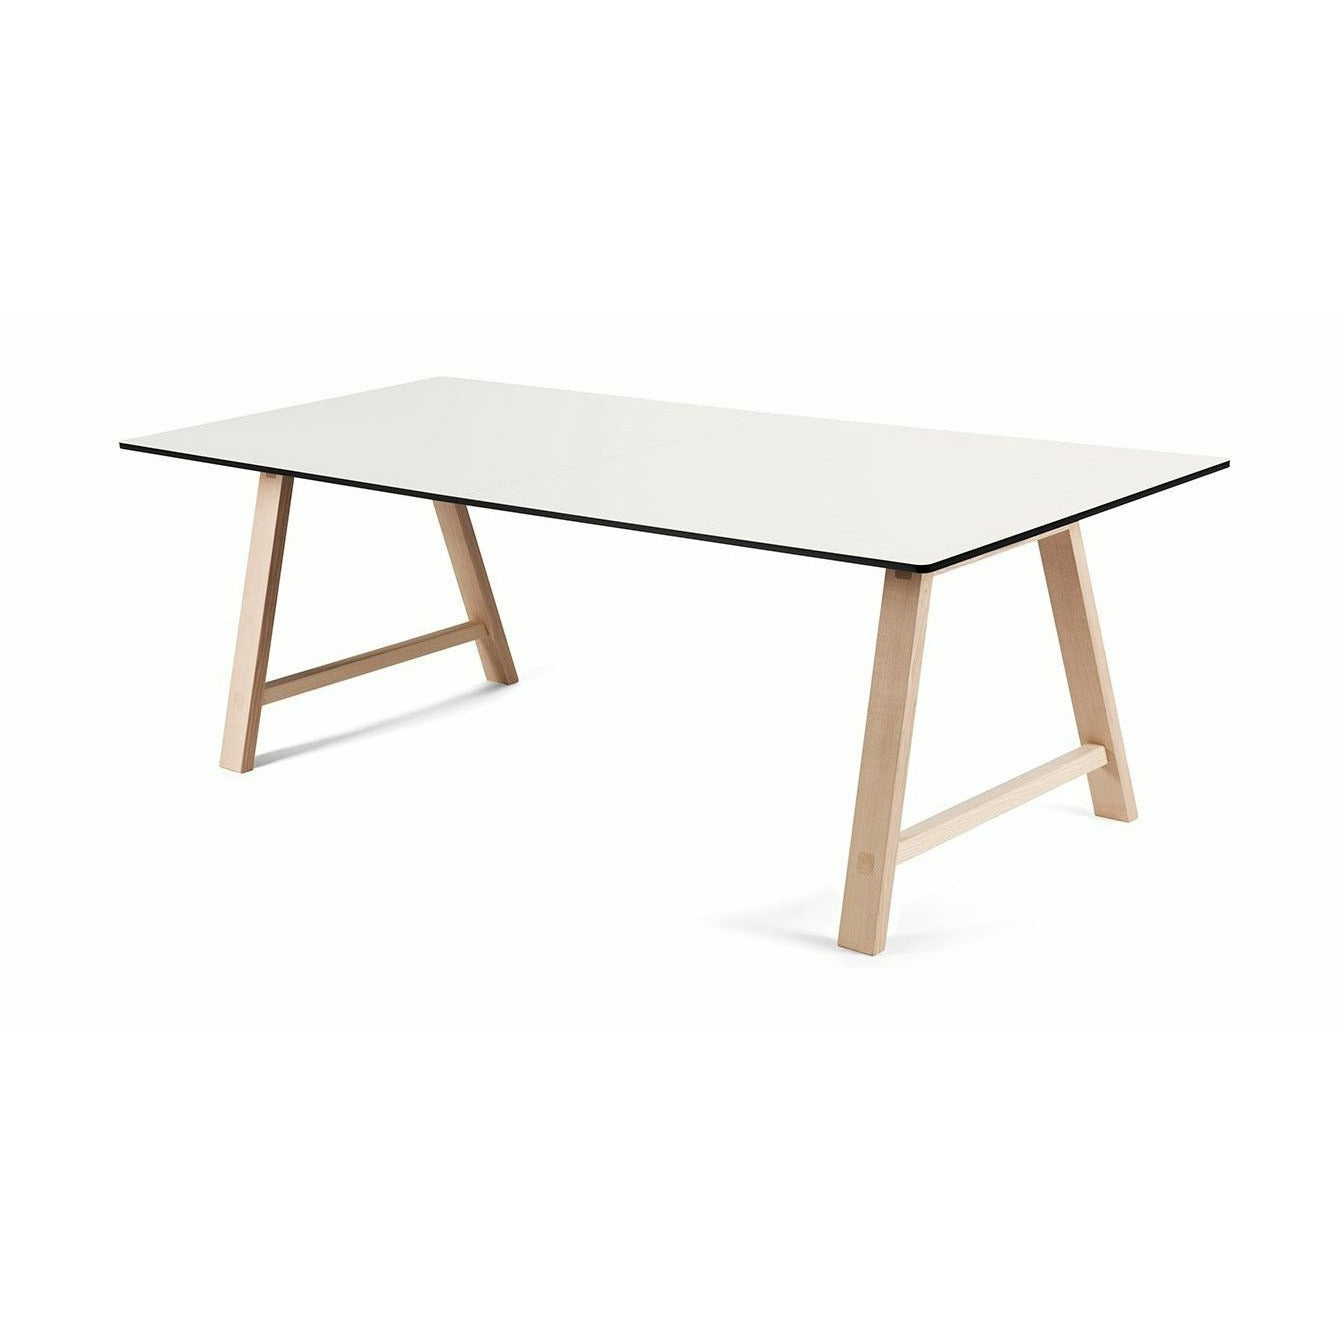 Wydłużony stół meble Andersen T1, biały laminat, dąb Soaped, 220 cm